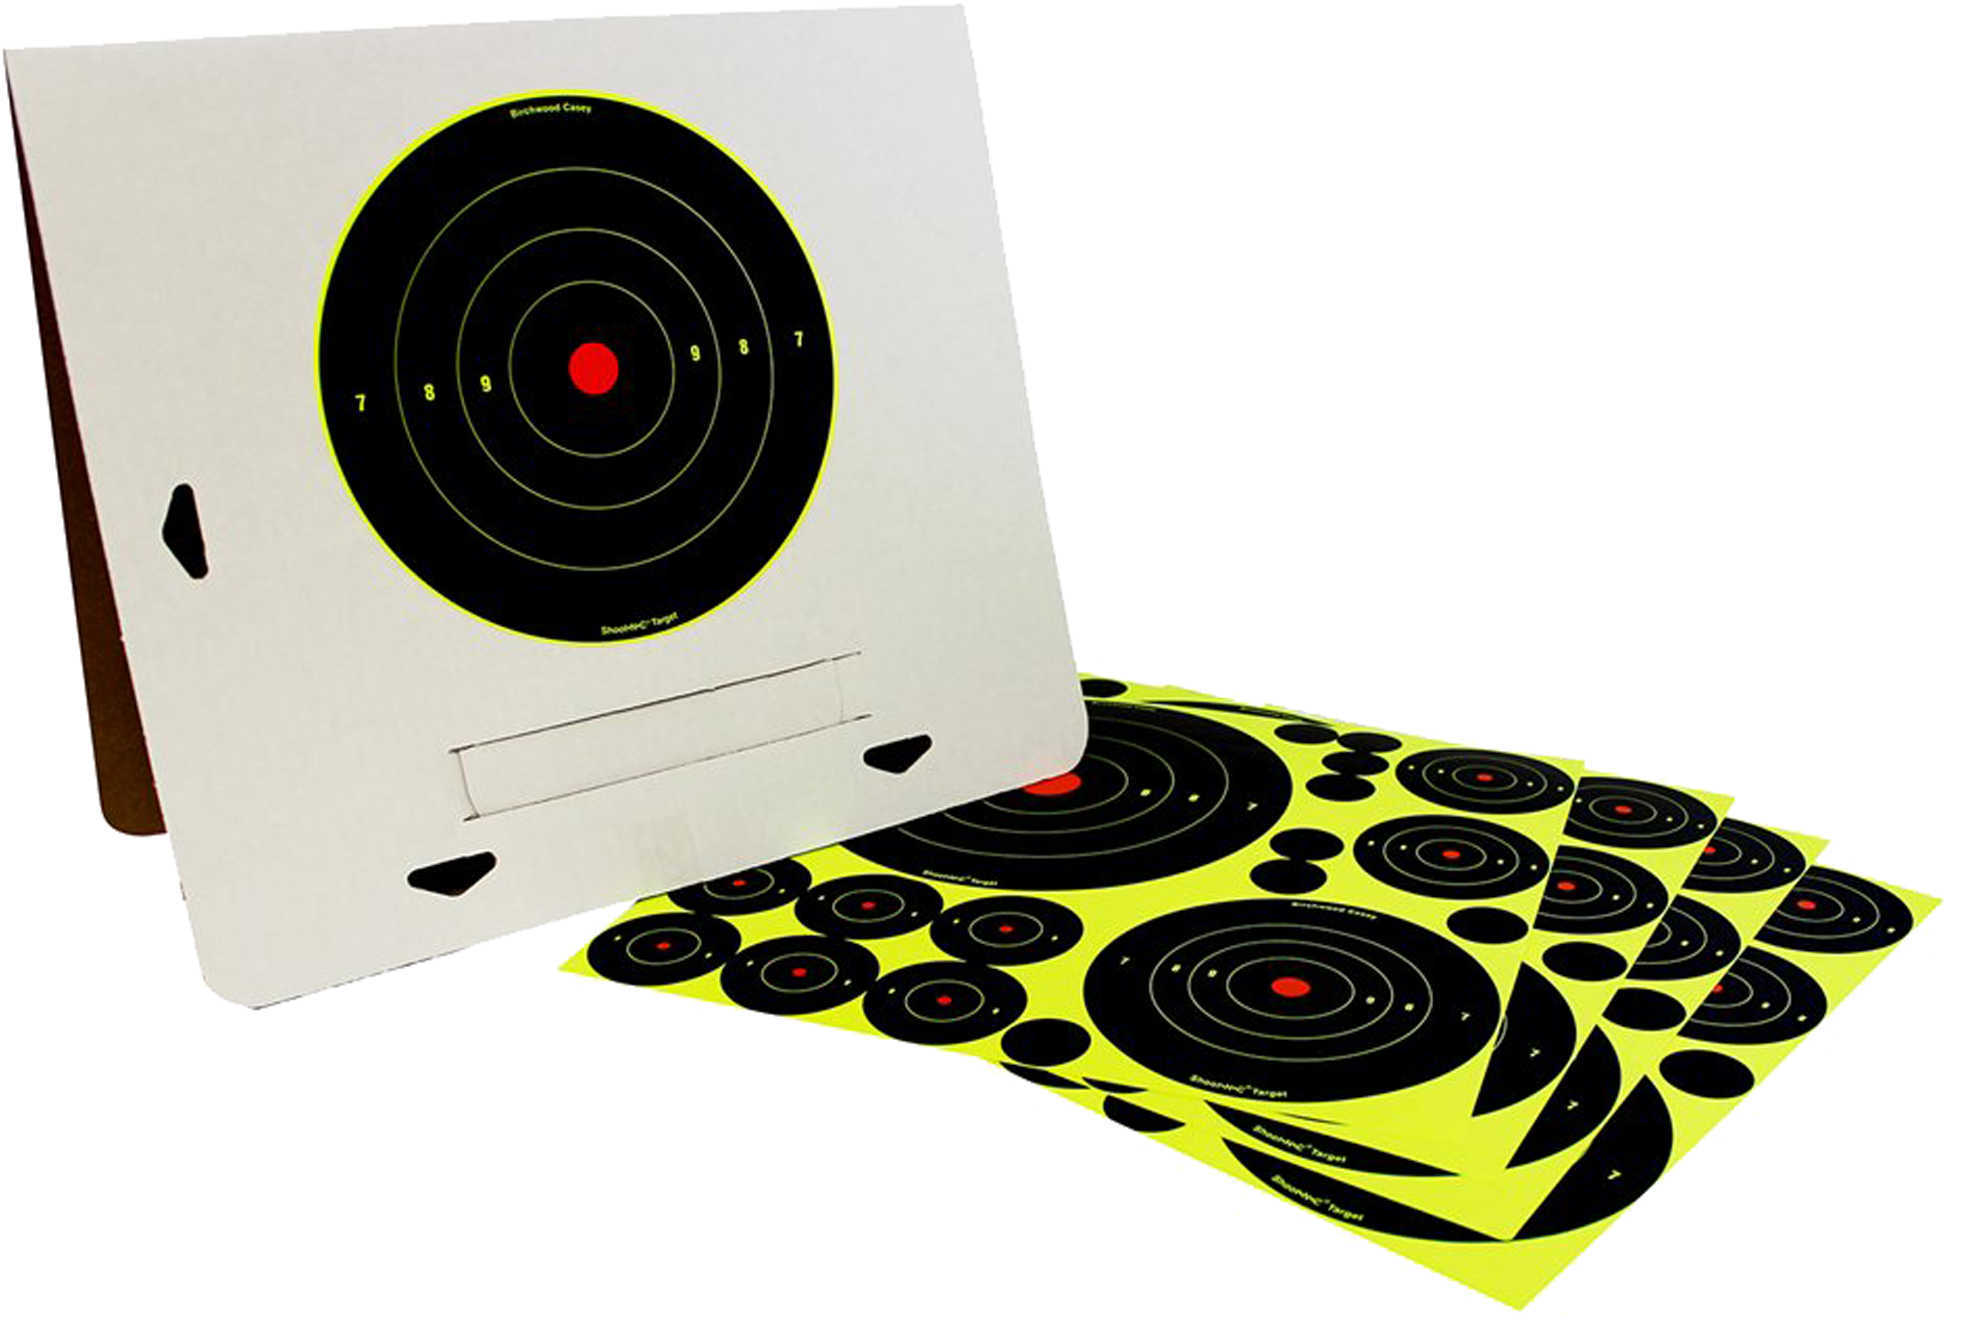 Birchwood Casey Bc-34208 Shoot-N-C Variety Pack Bullseye Adhesive Paper Target 4 Per Pkg